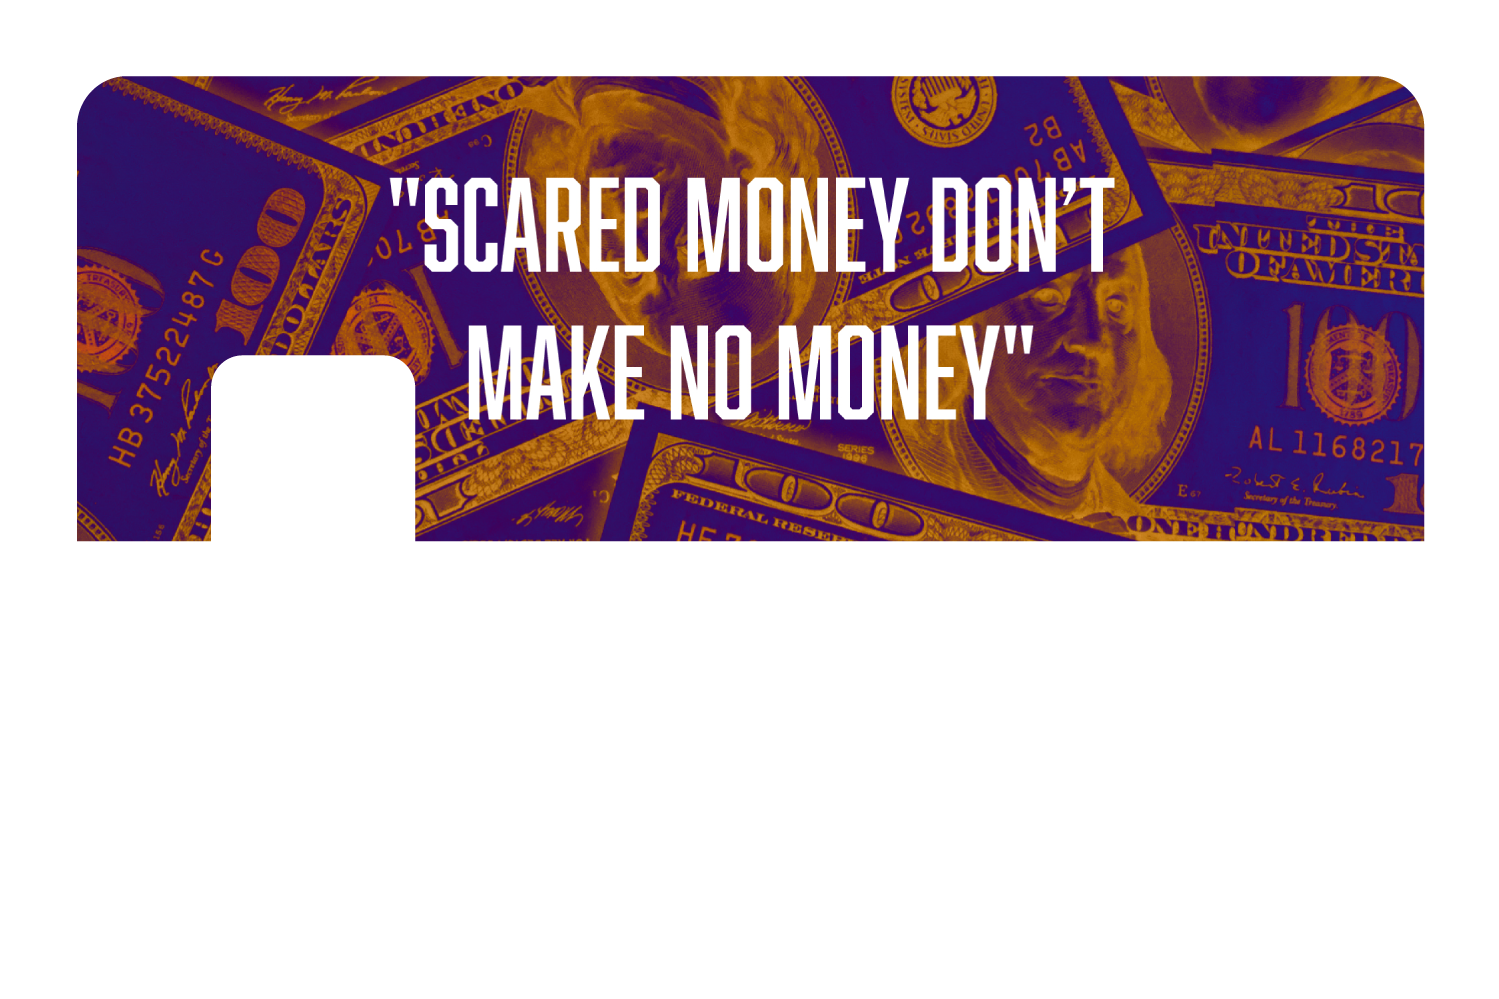 Scared Money